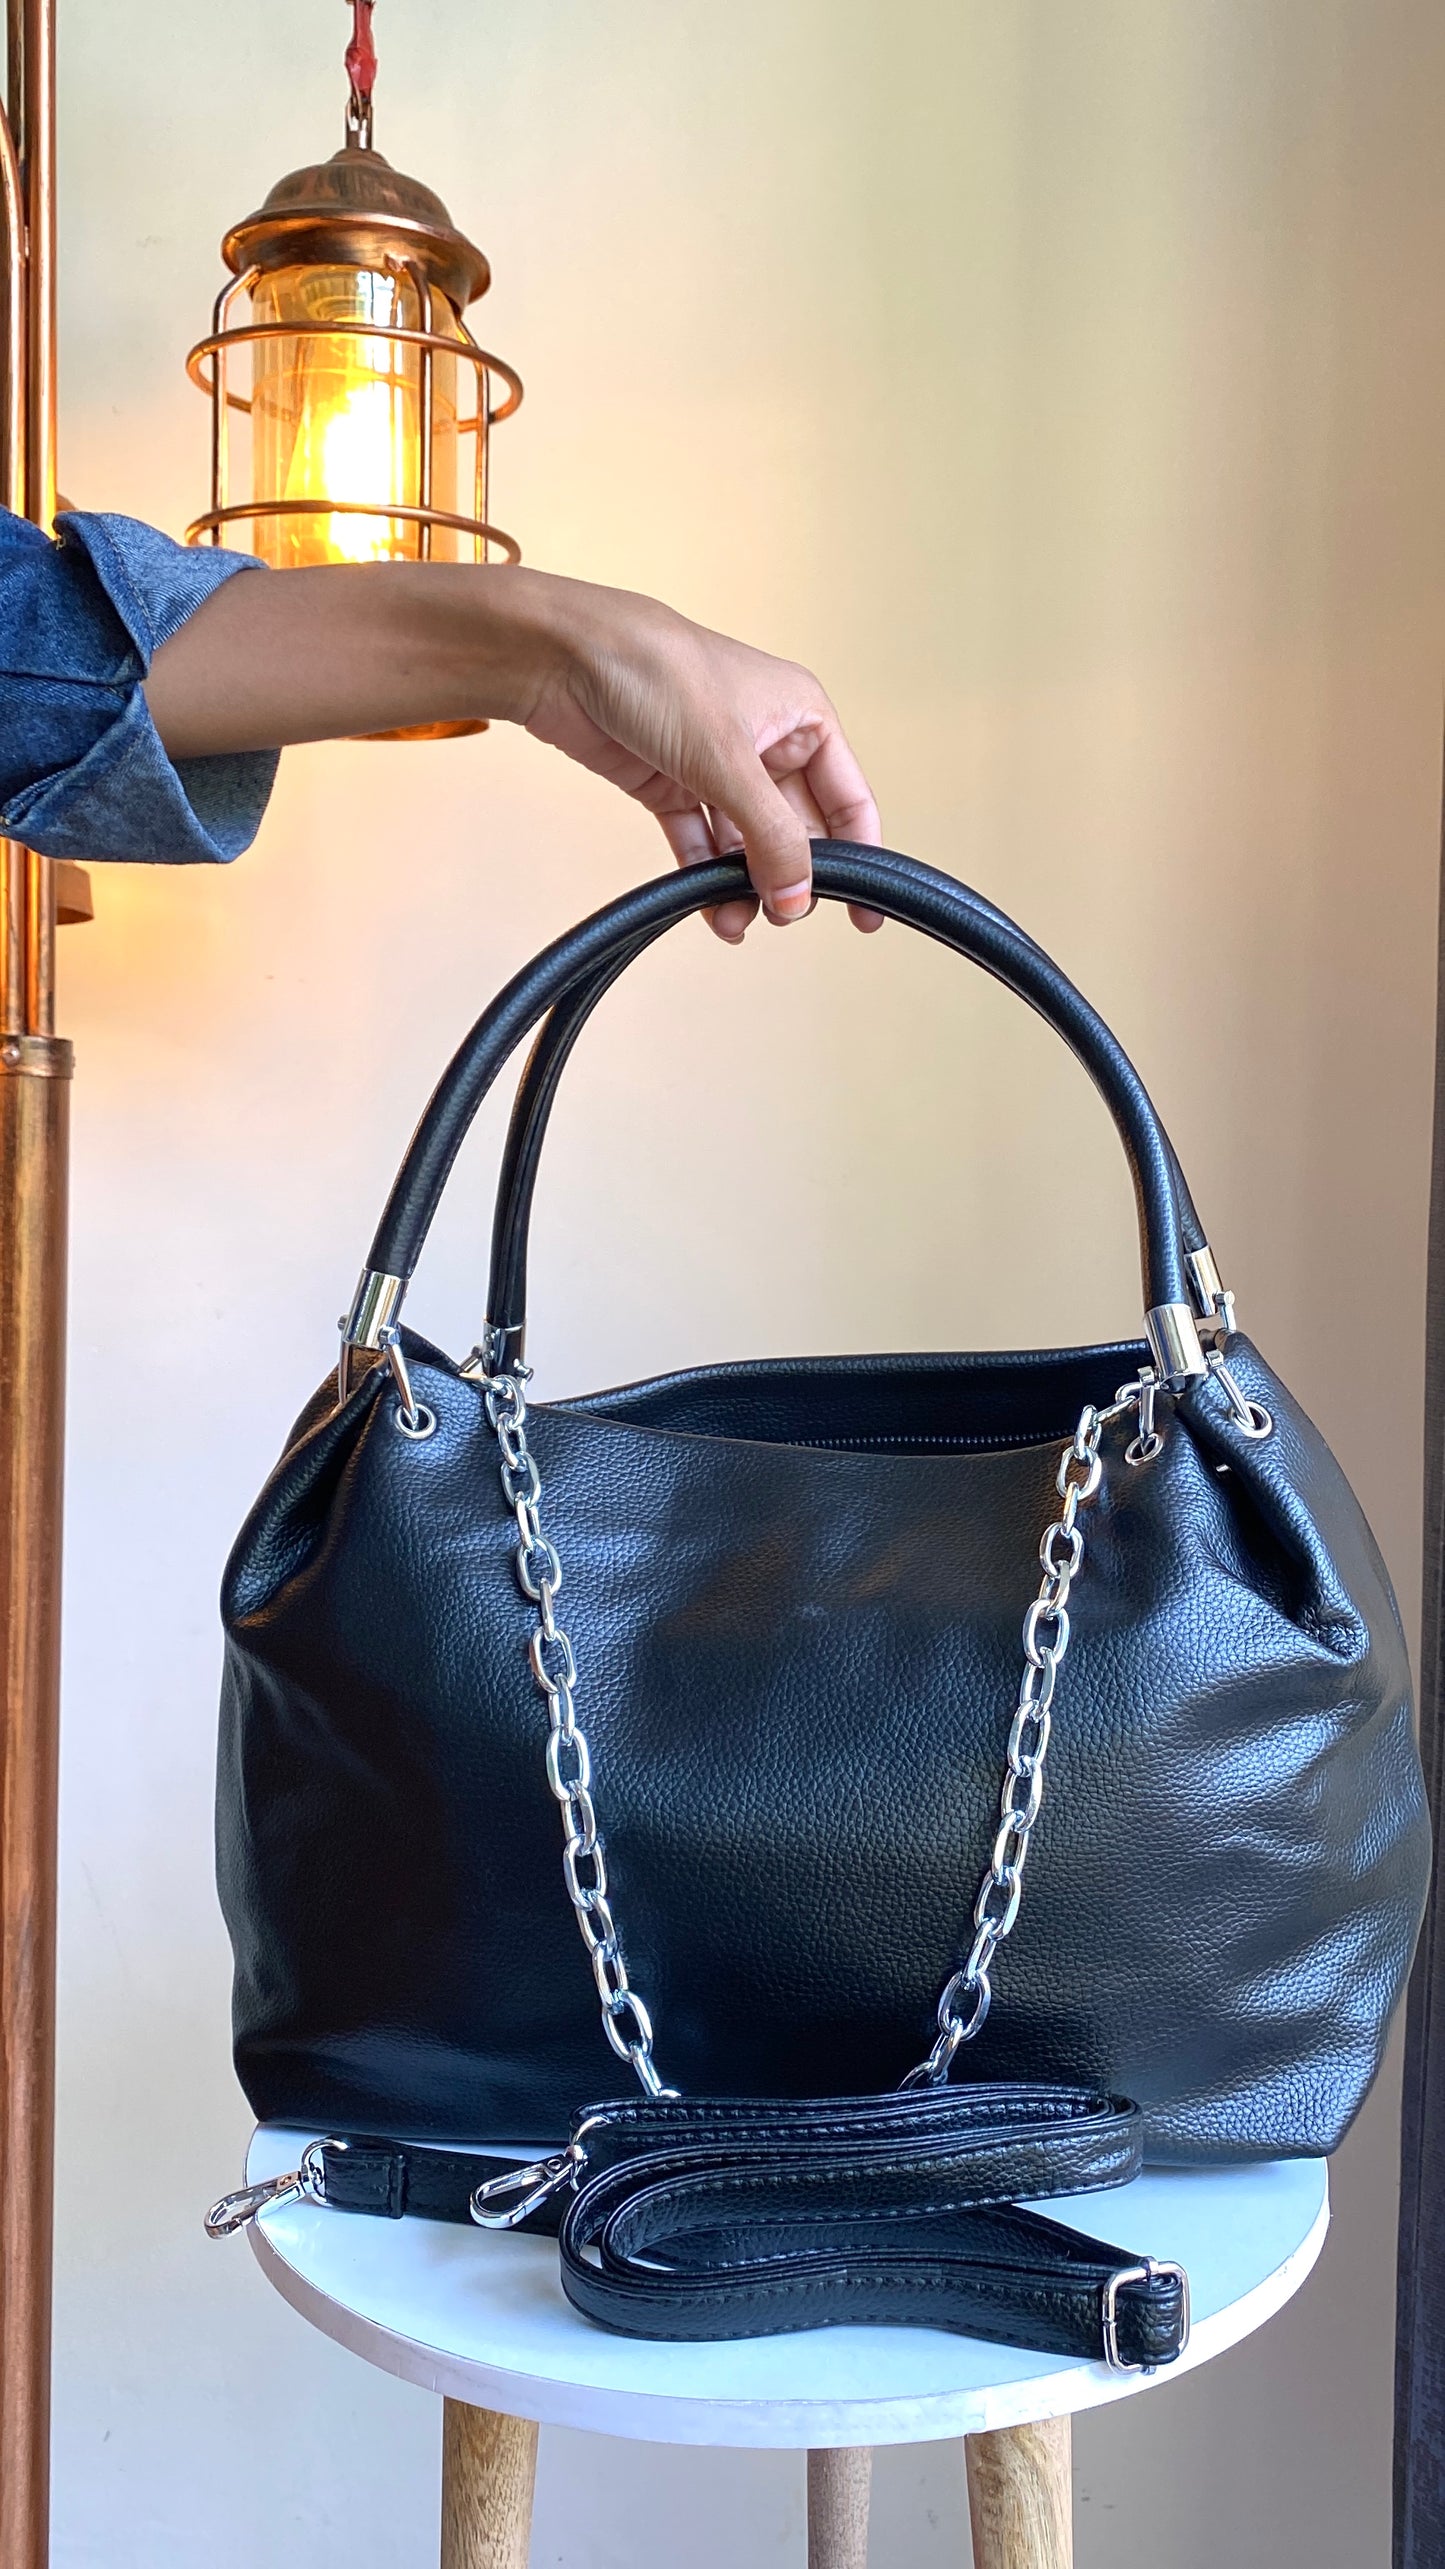 Bella purse